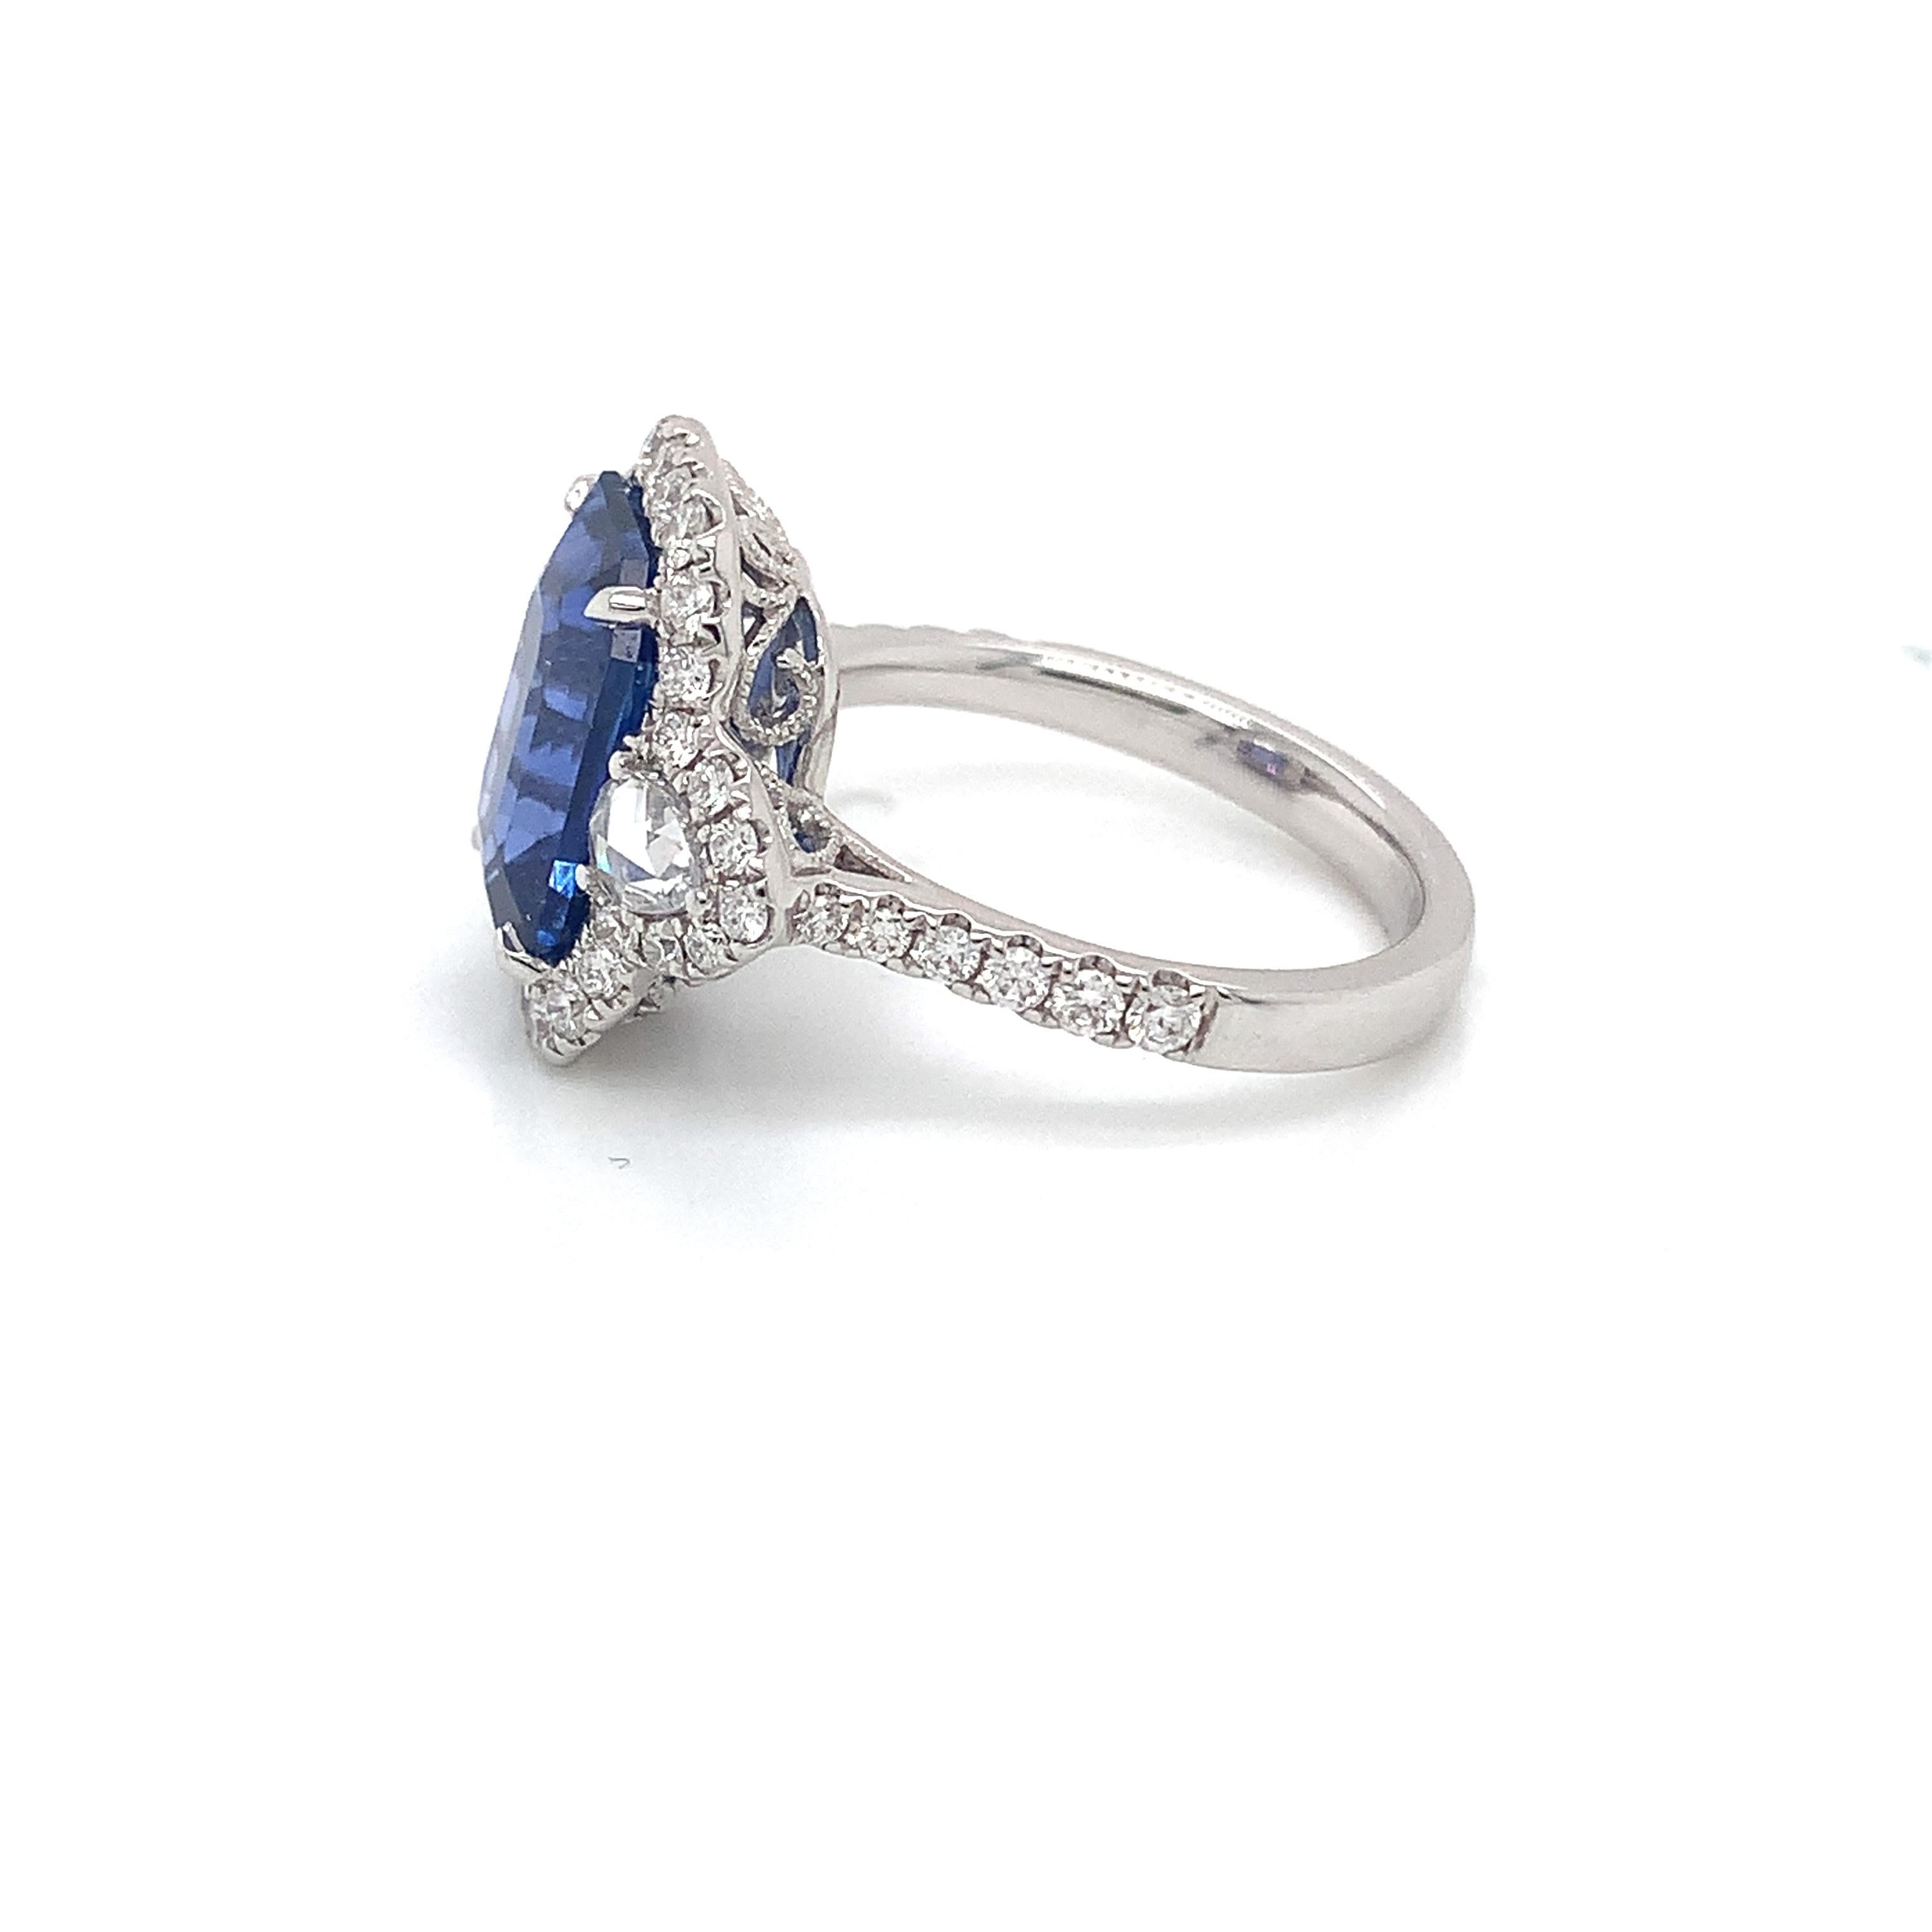 Octagon Cut GIA Certified Ceylon Sapphire & Diamond Ring in 18 Karat White Gold